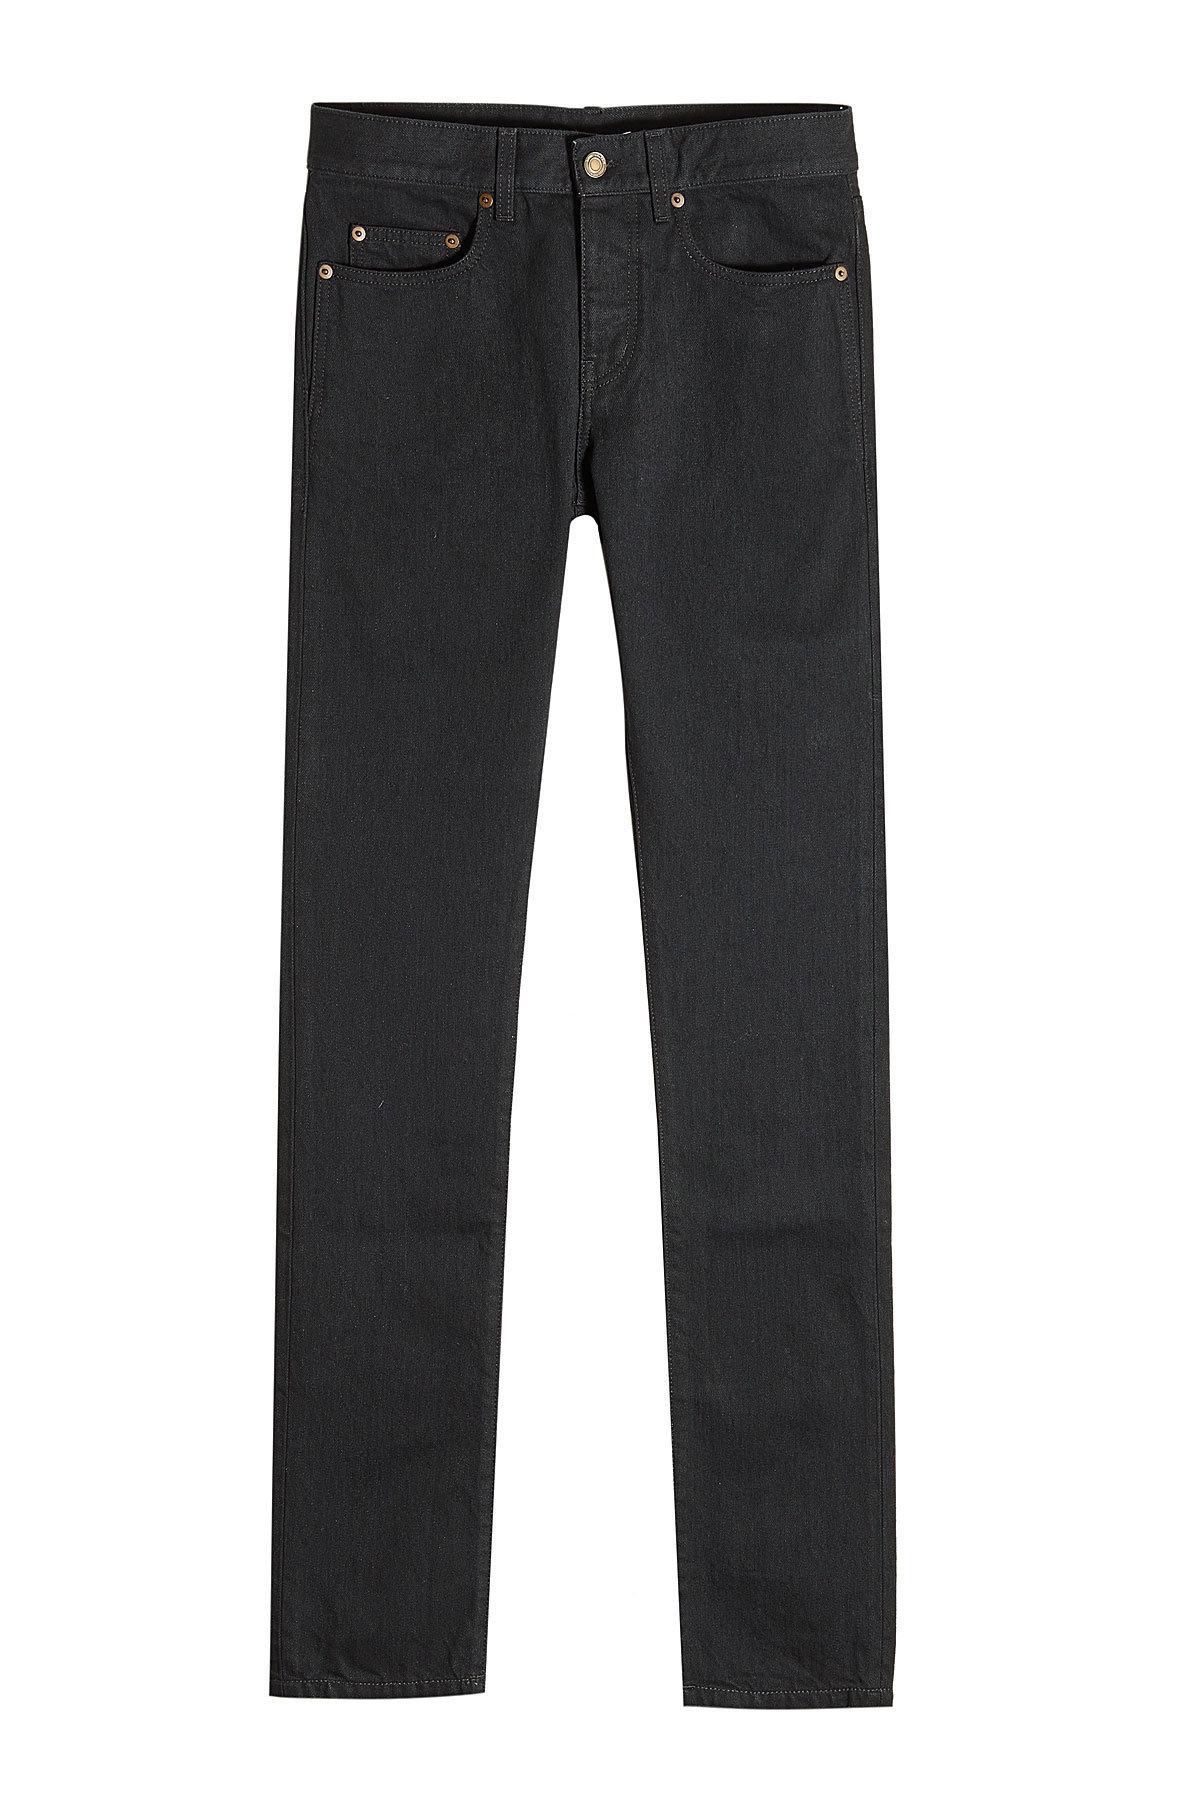 Saint Laurent Slim Jeans In Black | ModeSens